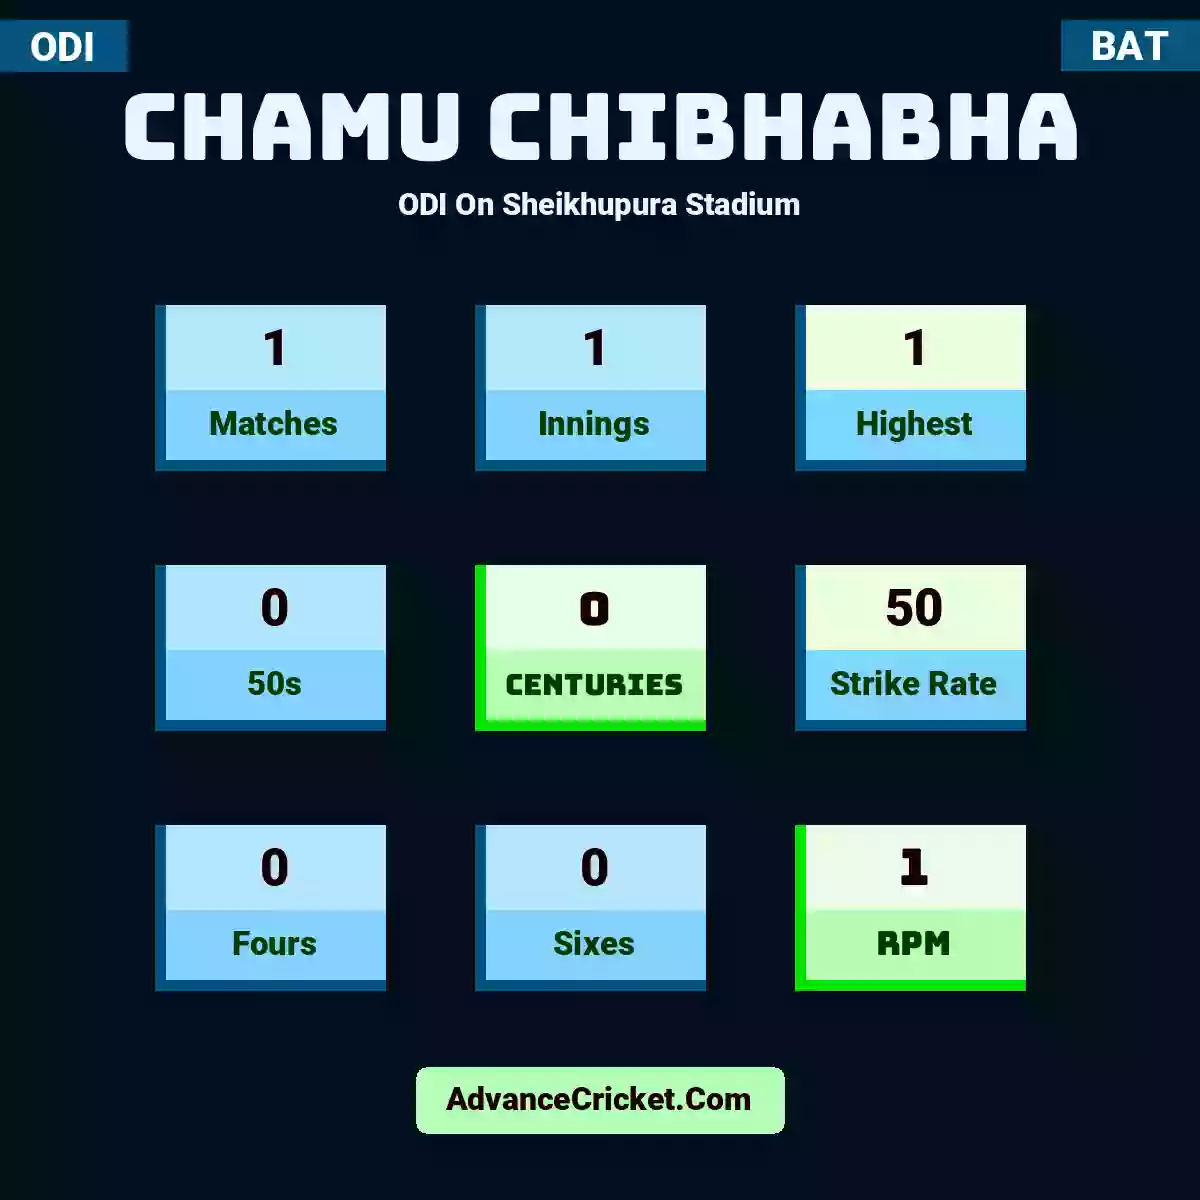 Chamu Chibhabha ODI  On Sheikhupura Stadium, Chamu Chibhabha played 1 matches, scored 1 runs as highest, 0 half-centuries, and 0 centuries, with a strike rate of 50. C.Chibhabha hit 0 fours and 0 sixes, with an RPM of 1.